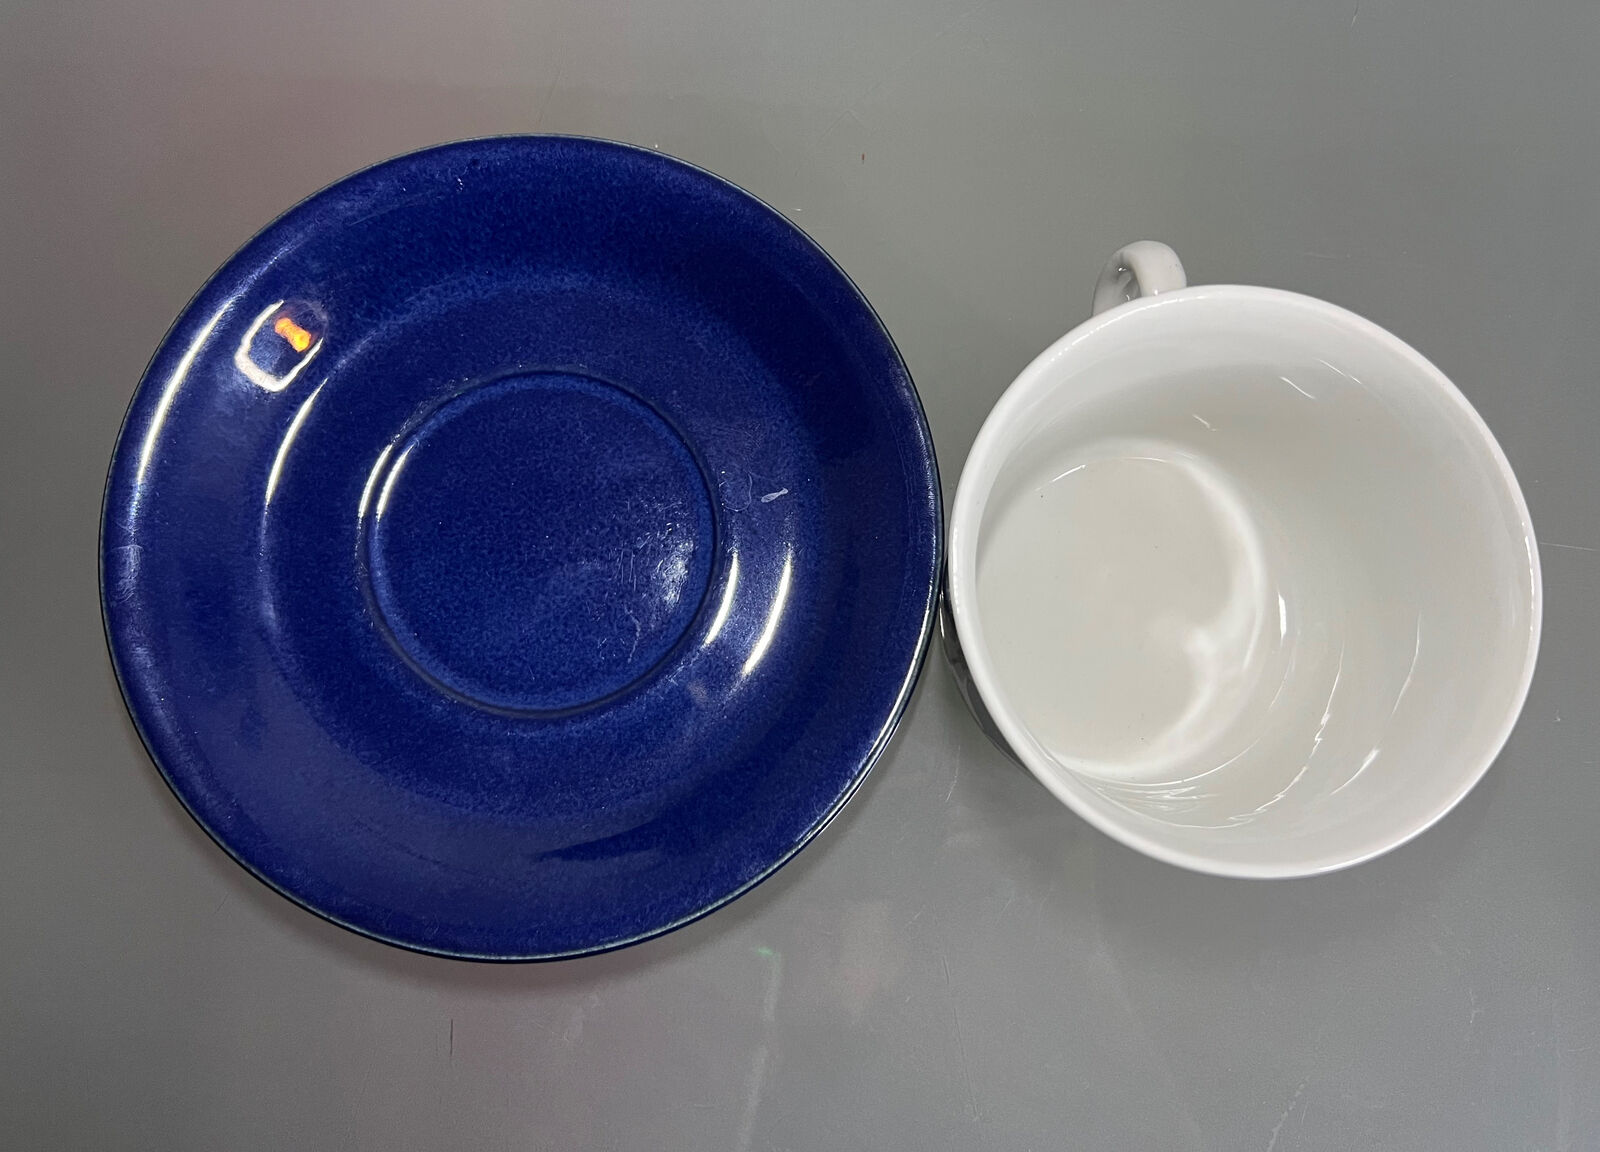 Gefle Groblad (Blue) Tea Cup with Saucer by Barbro Löfgren-Örtendahl